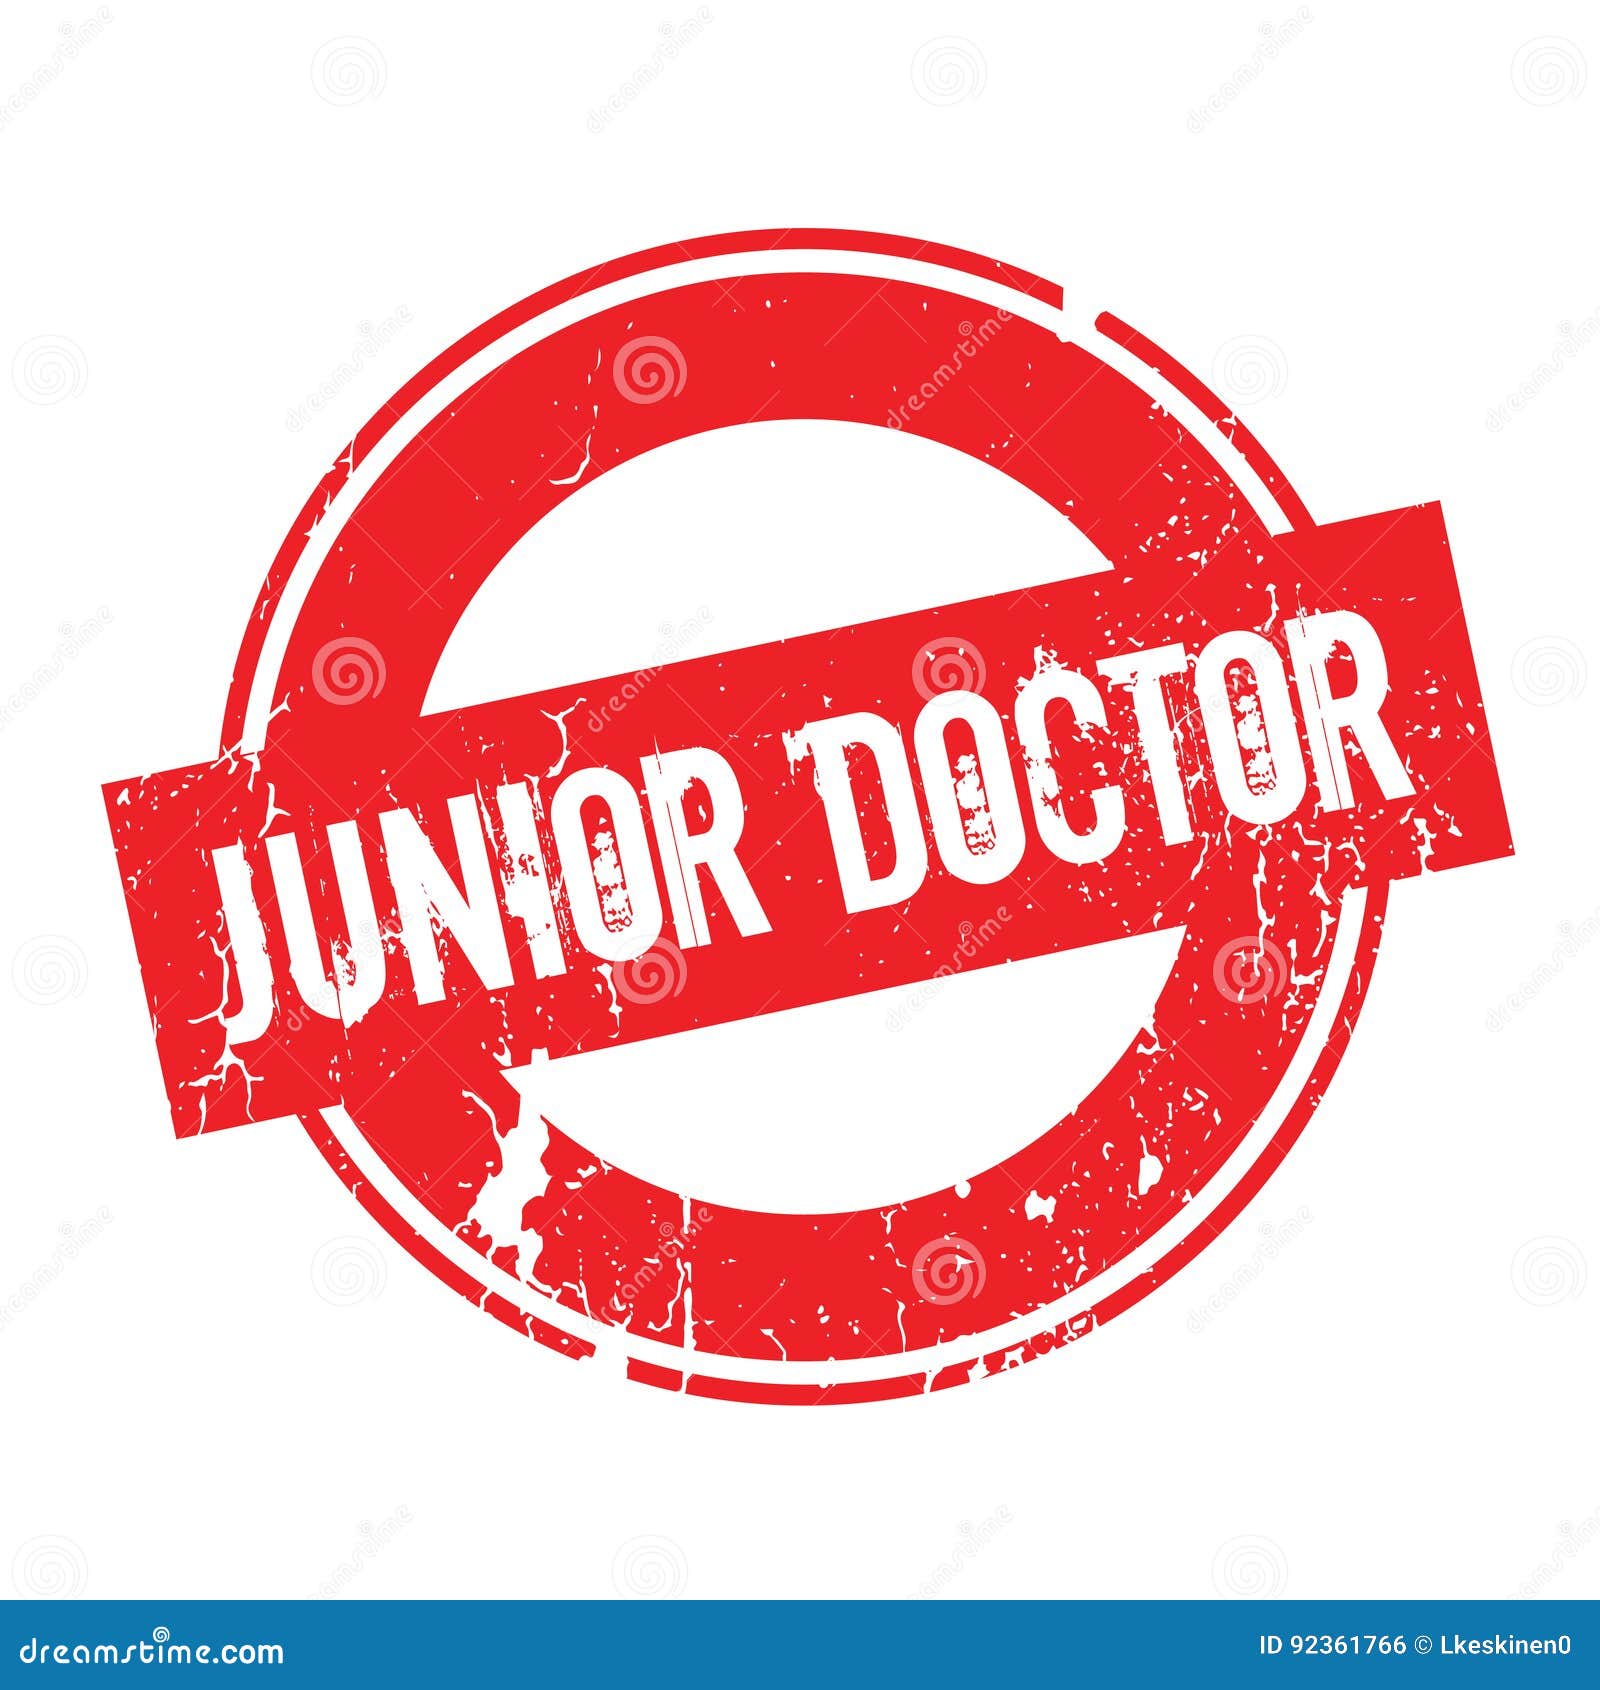 junior doctor rubber stamp